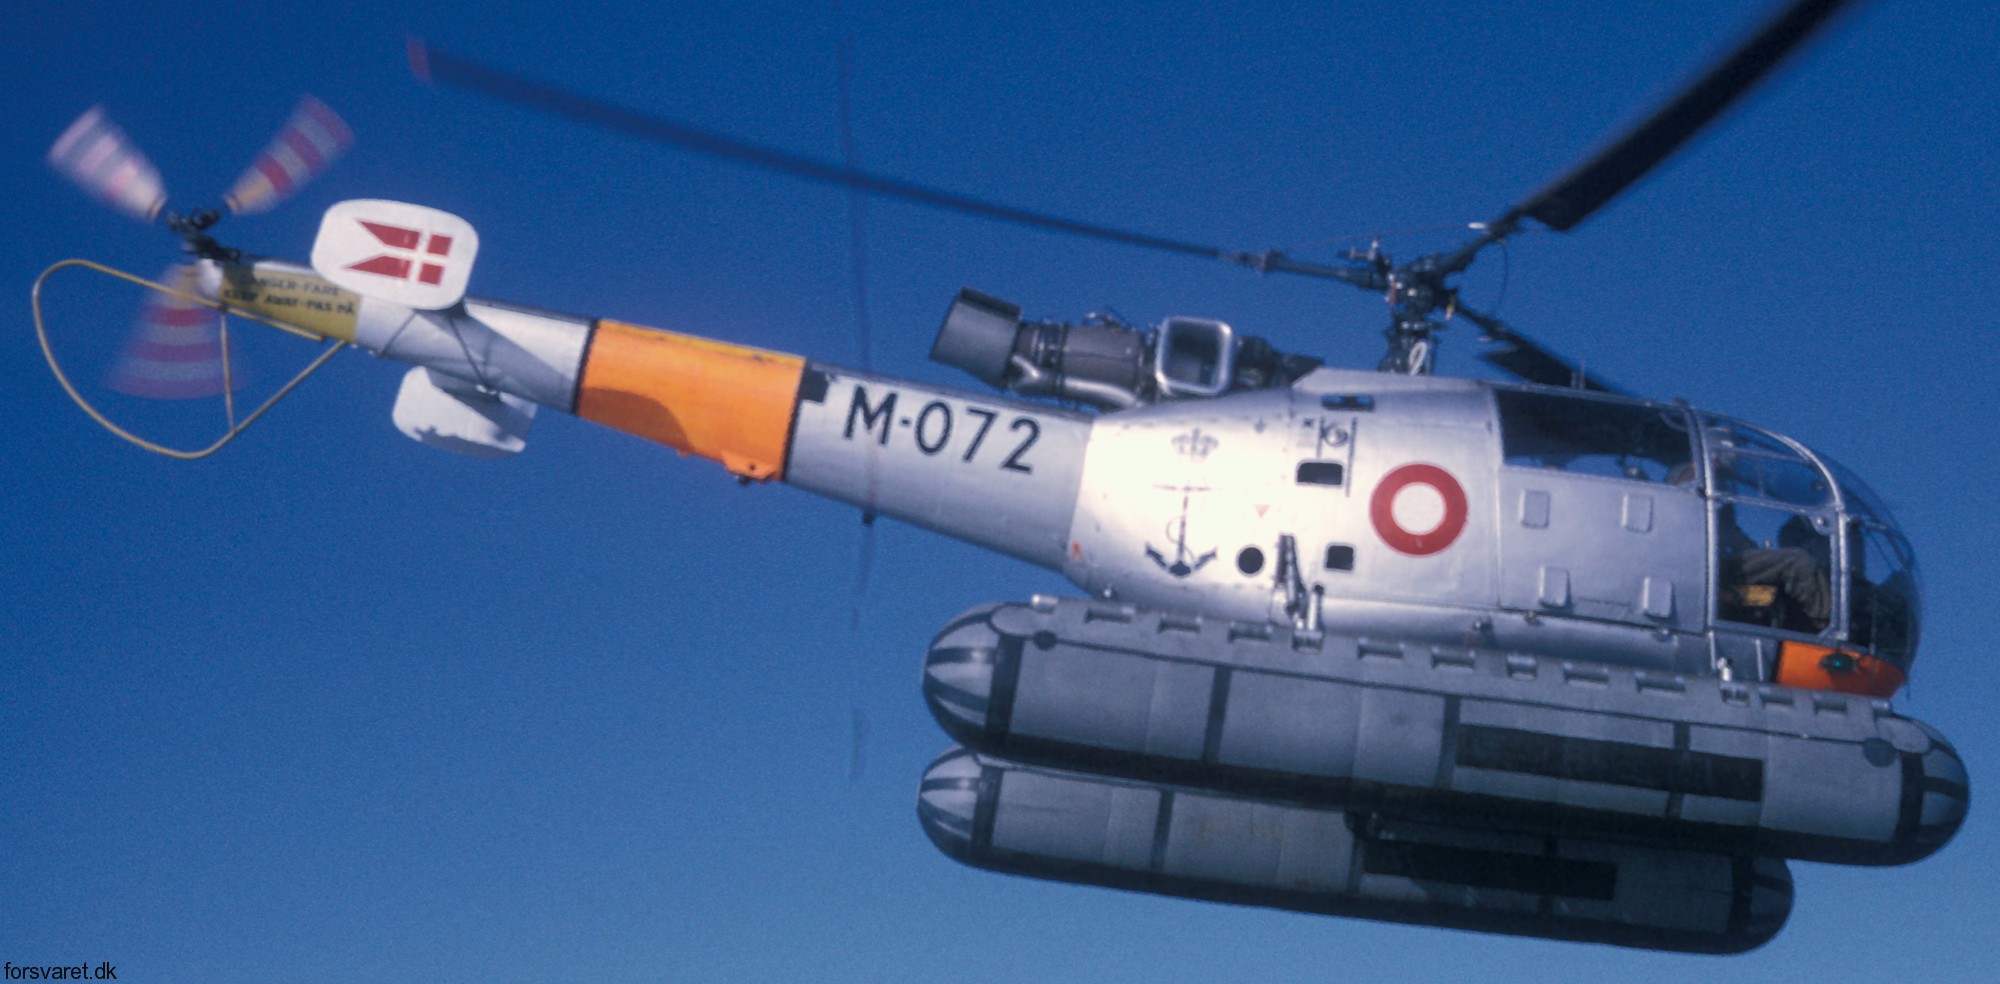 sa 316b alouette iii helicopter royal danish navy søværnet kongelige danske marine sud aviation m-072 04